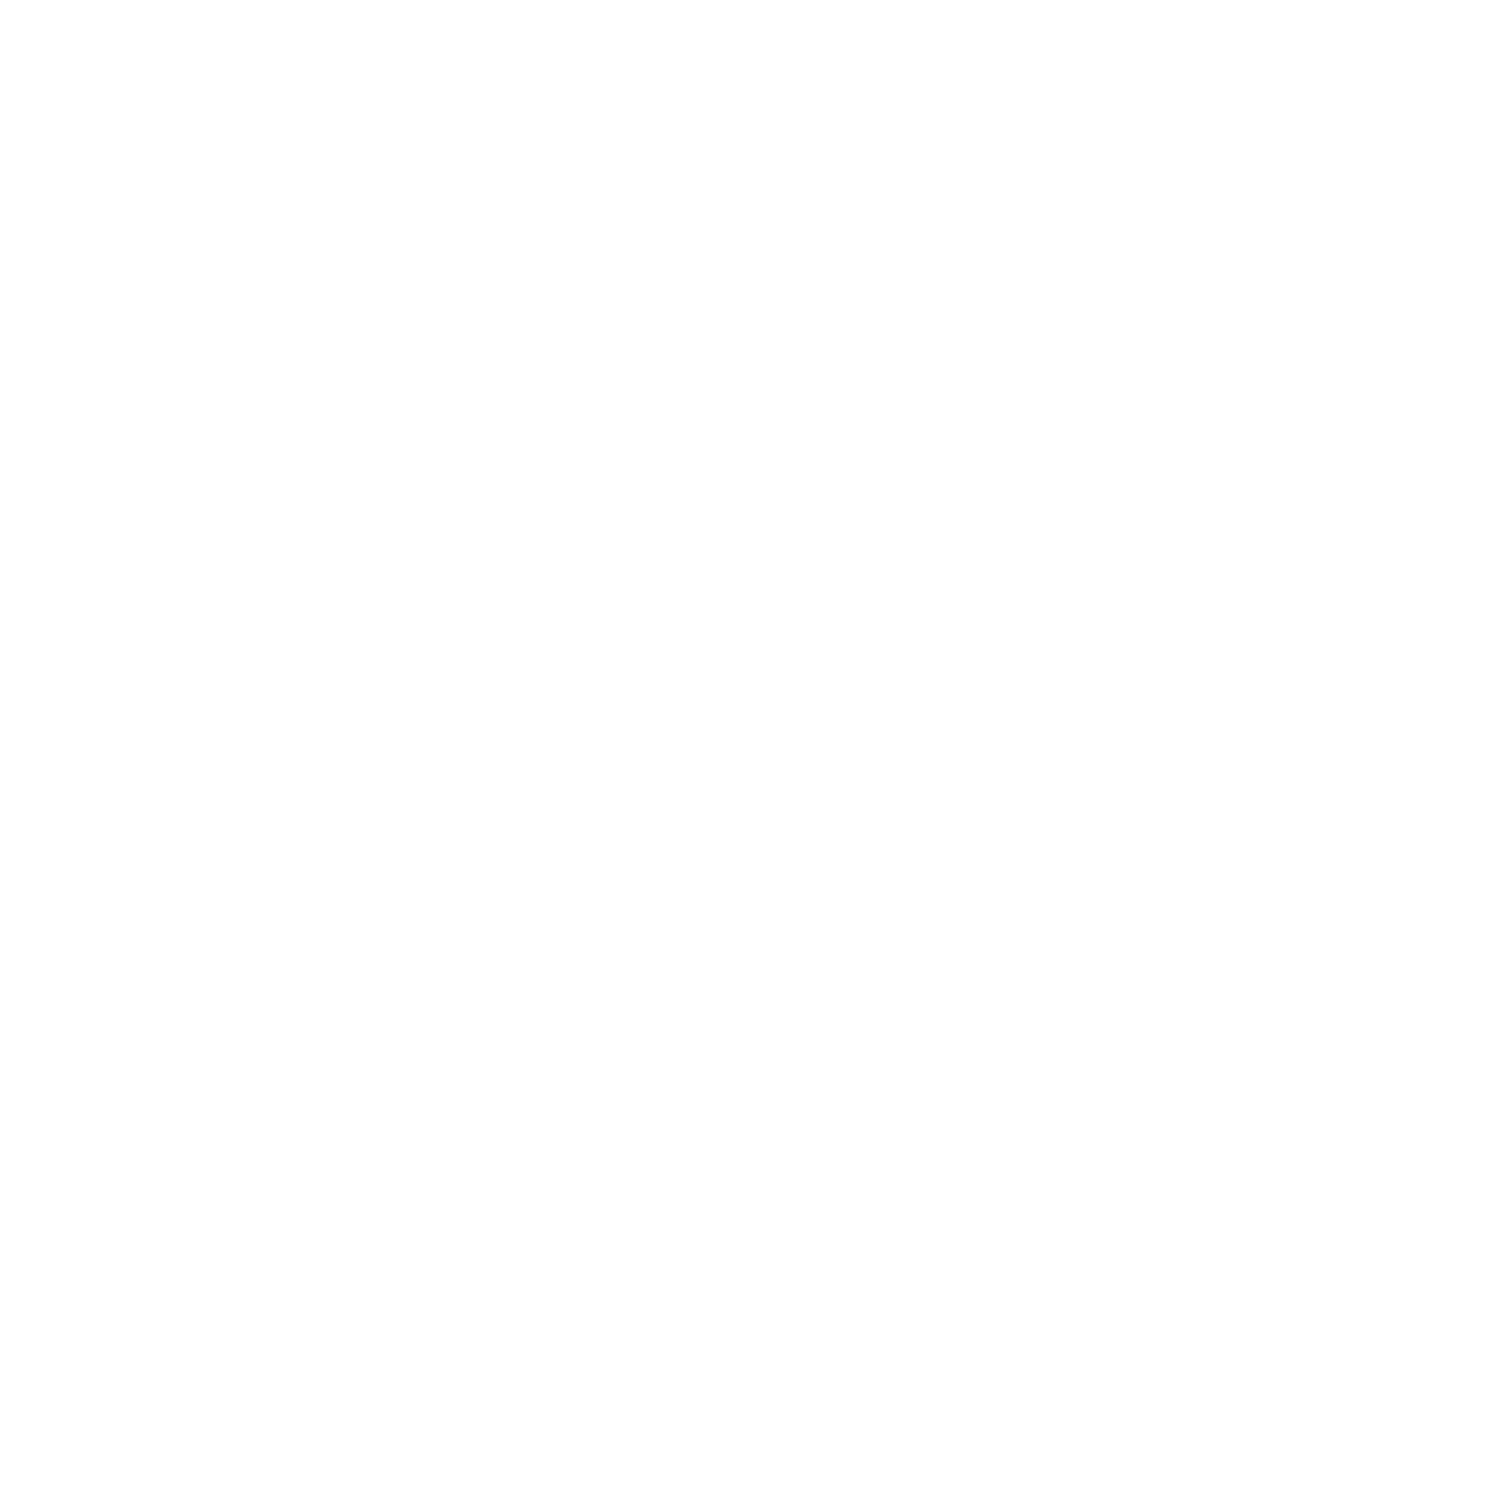 Eighty Seven Media